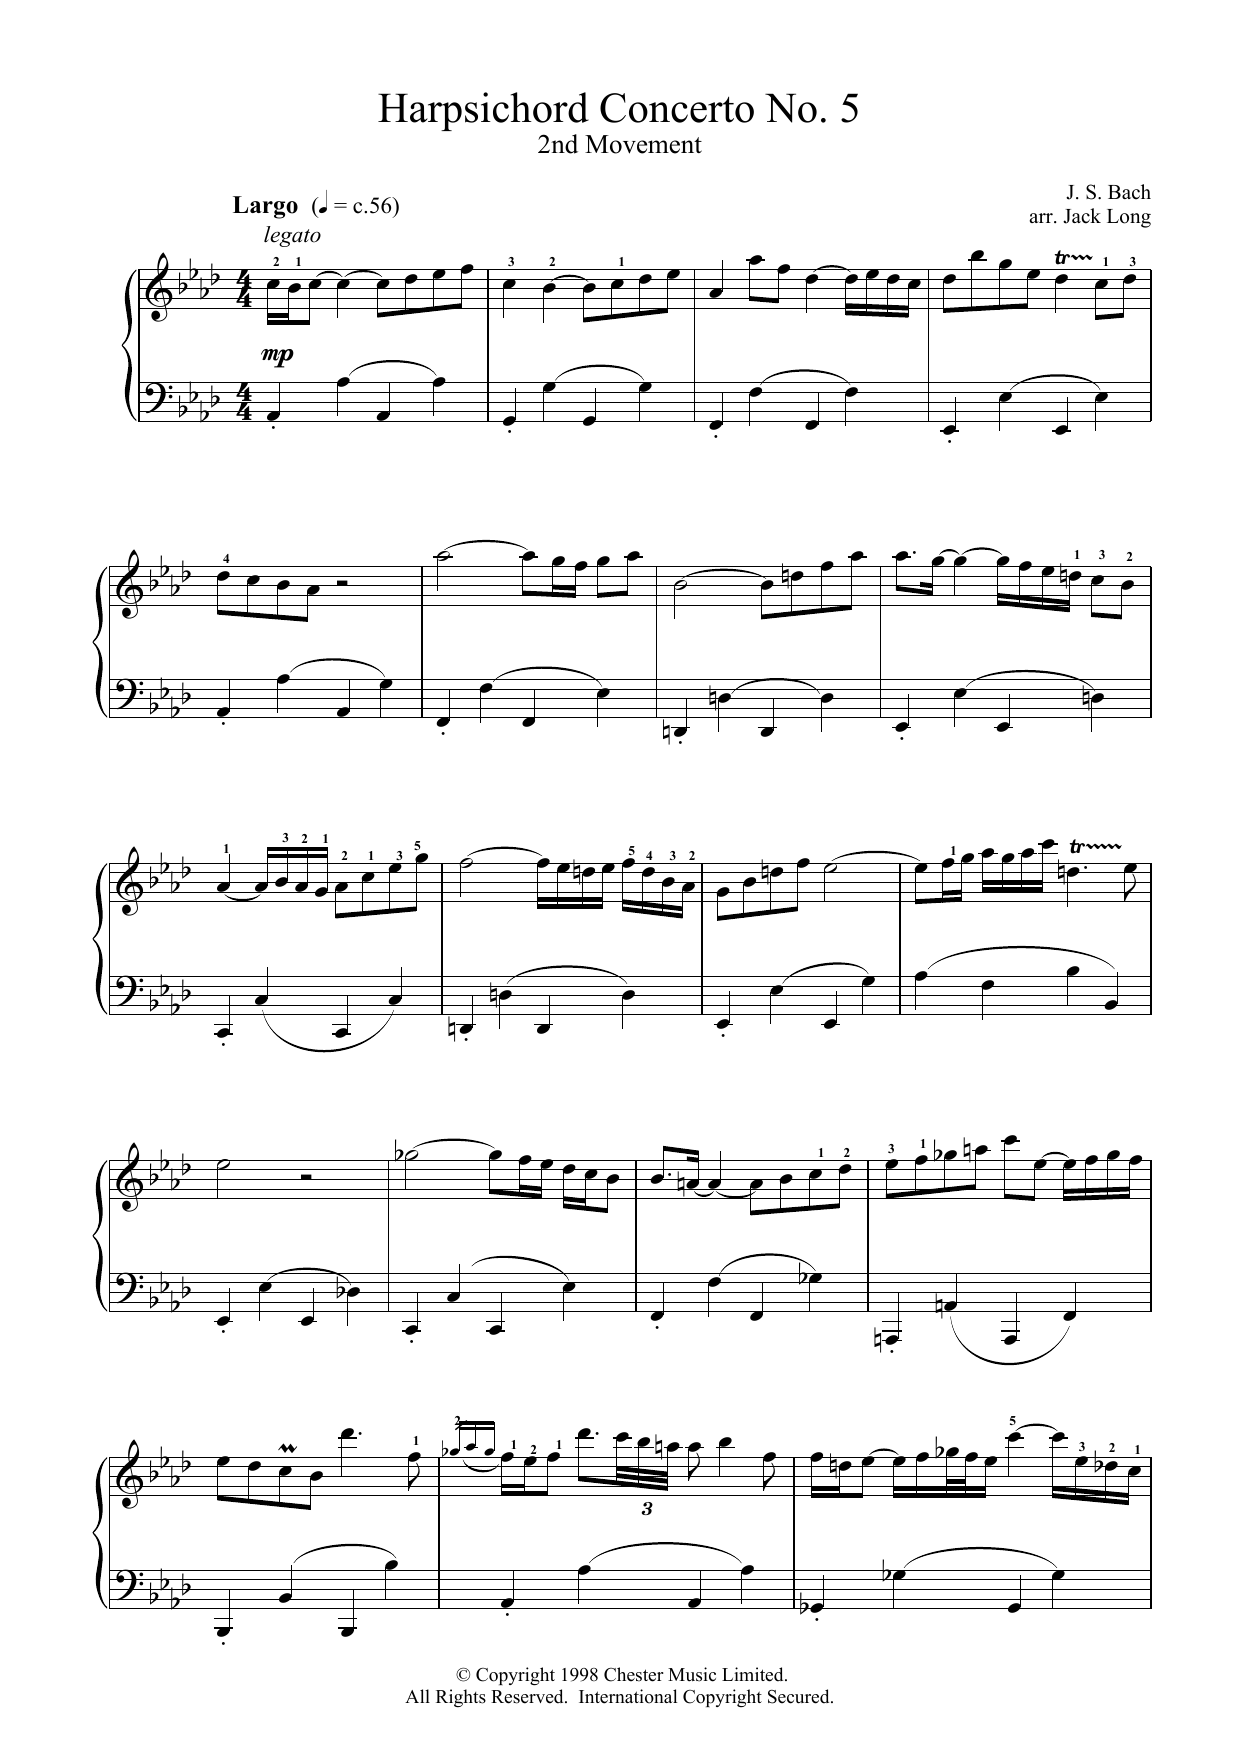 Johann Sebastian Bach Harpsichord Concerto No. 5 Sheet Music Notes & Chords for Piano - Download or Print PDF